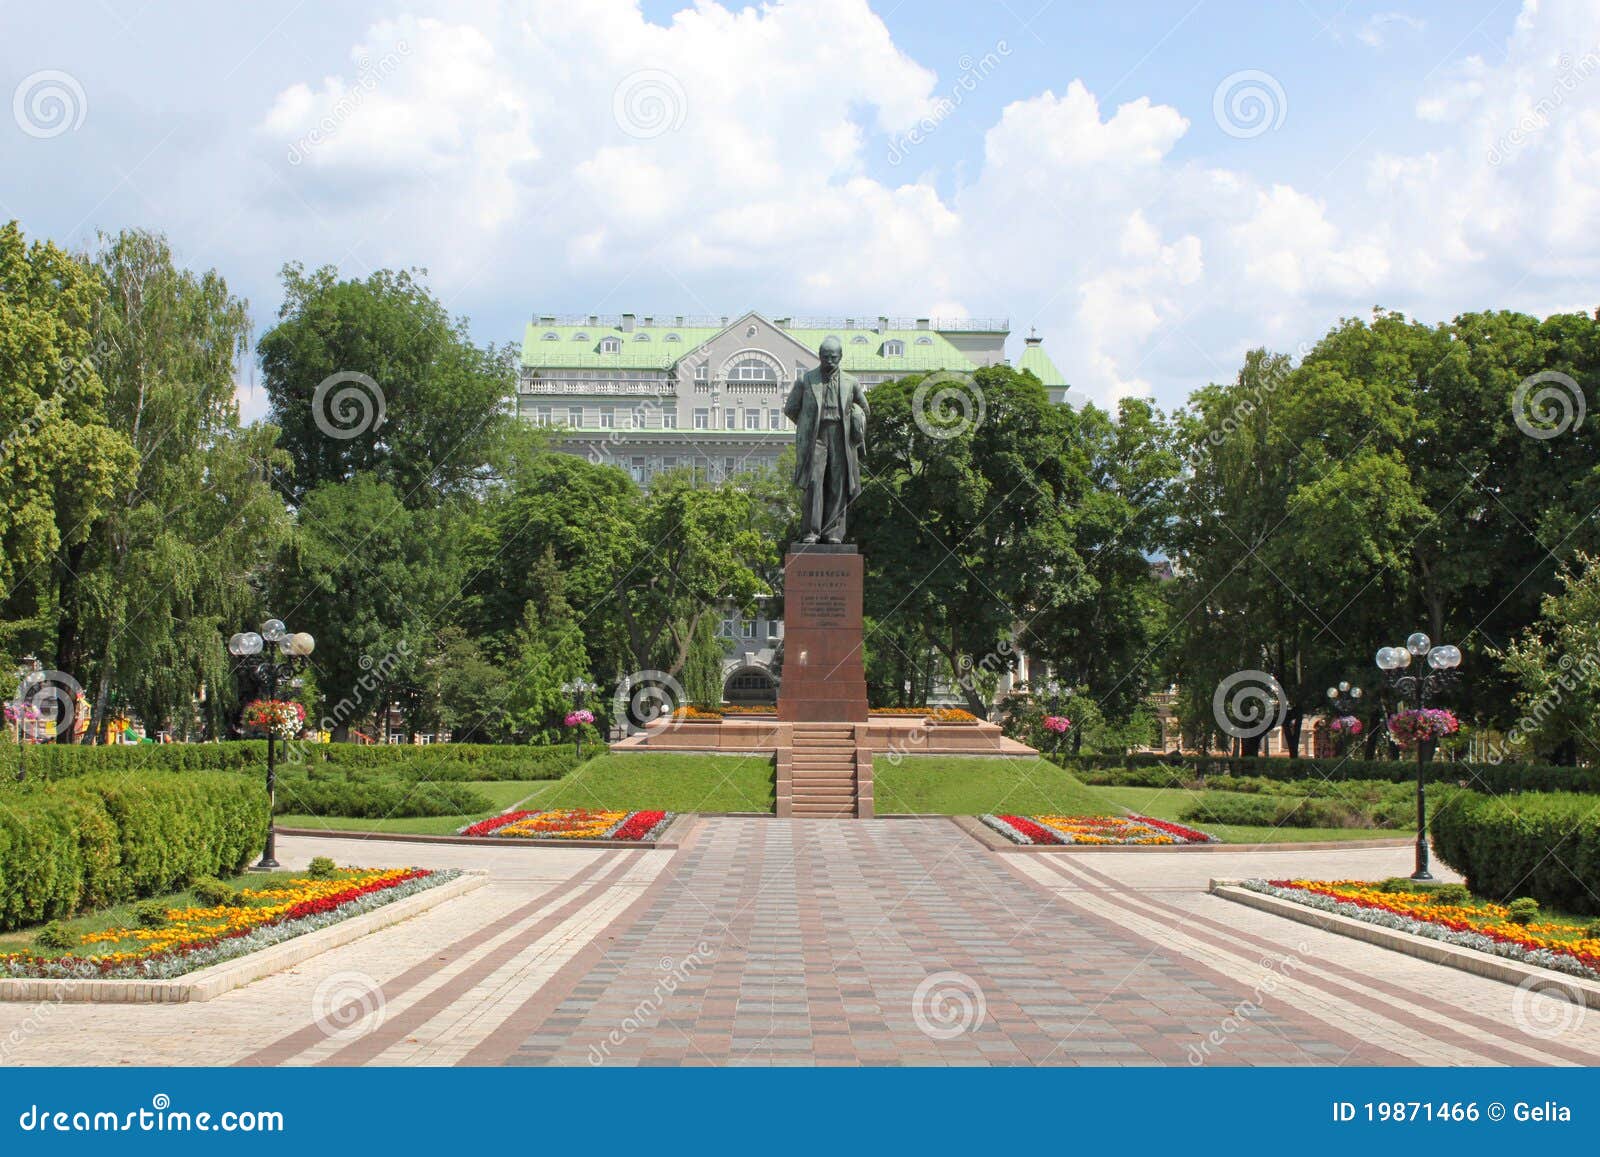 taras shevchenko monument in the park